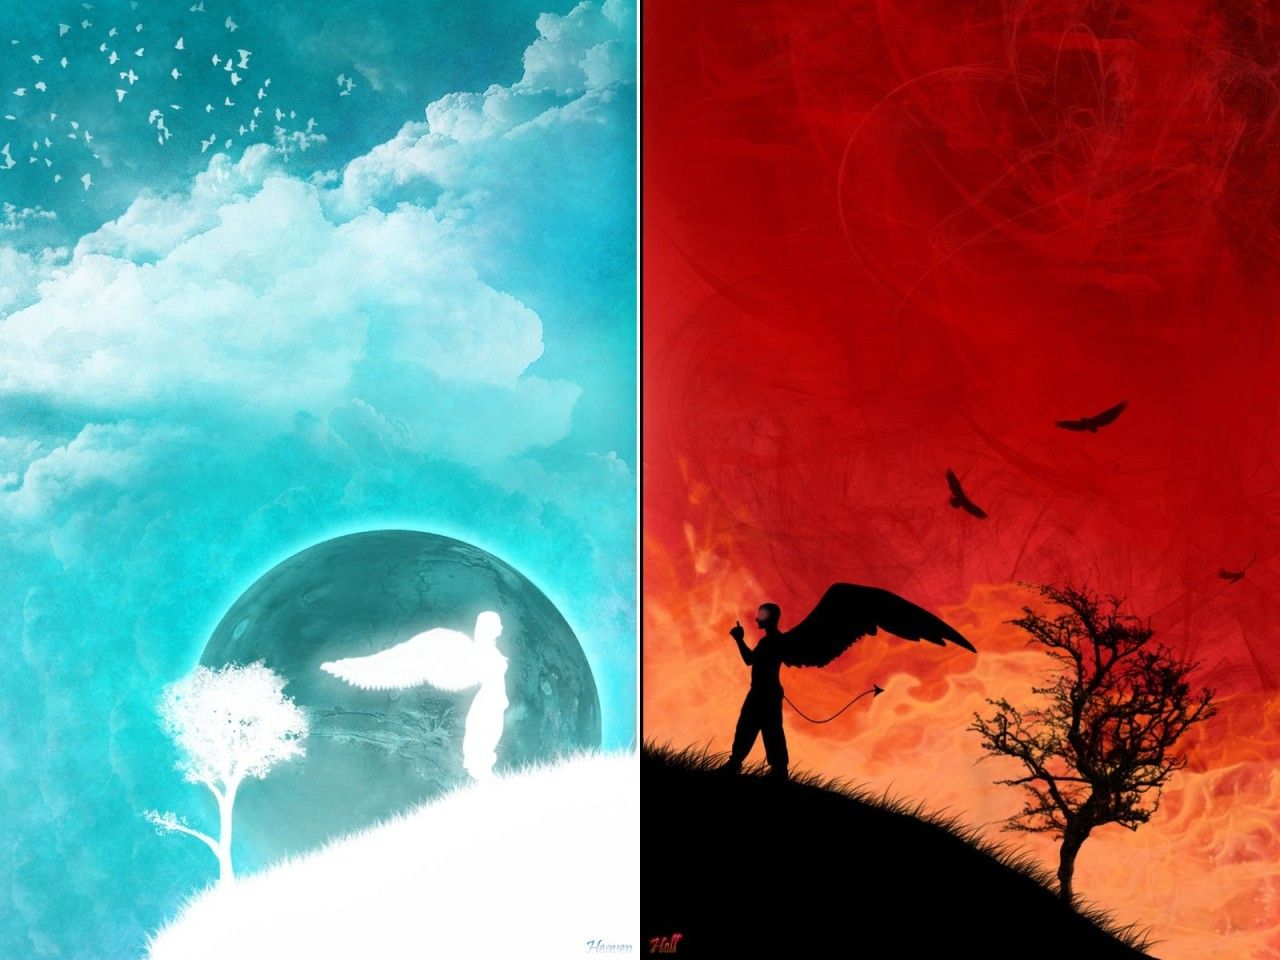 Heaven vs Hell Wallpaper. Naruto vs Sasuke Wallpaper, Red Vs. Blue Wallpaper and Batman vs Superman Wallpaper